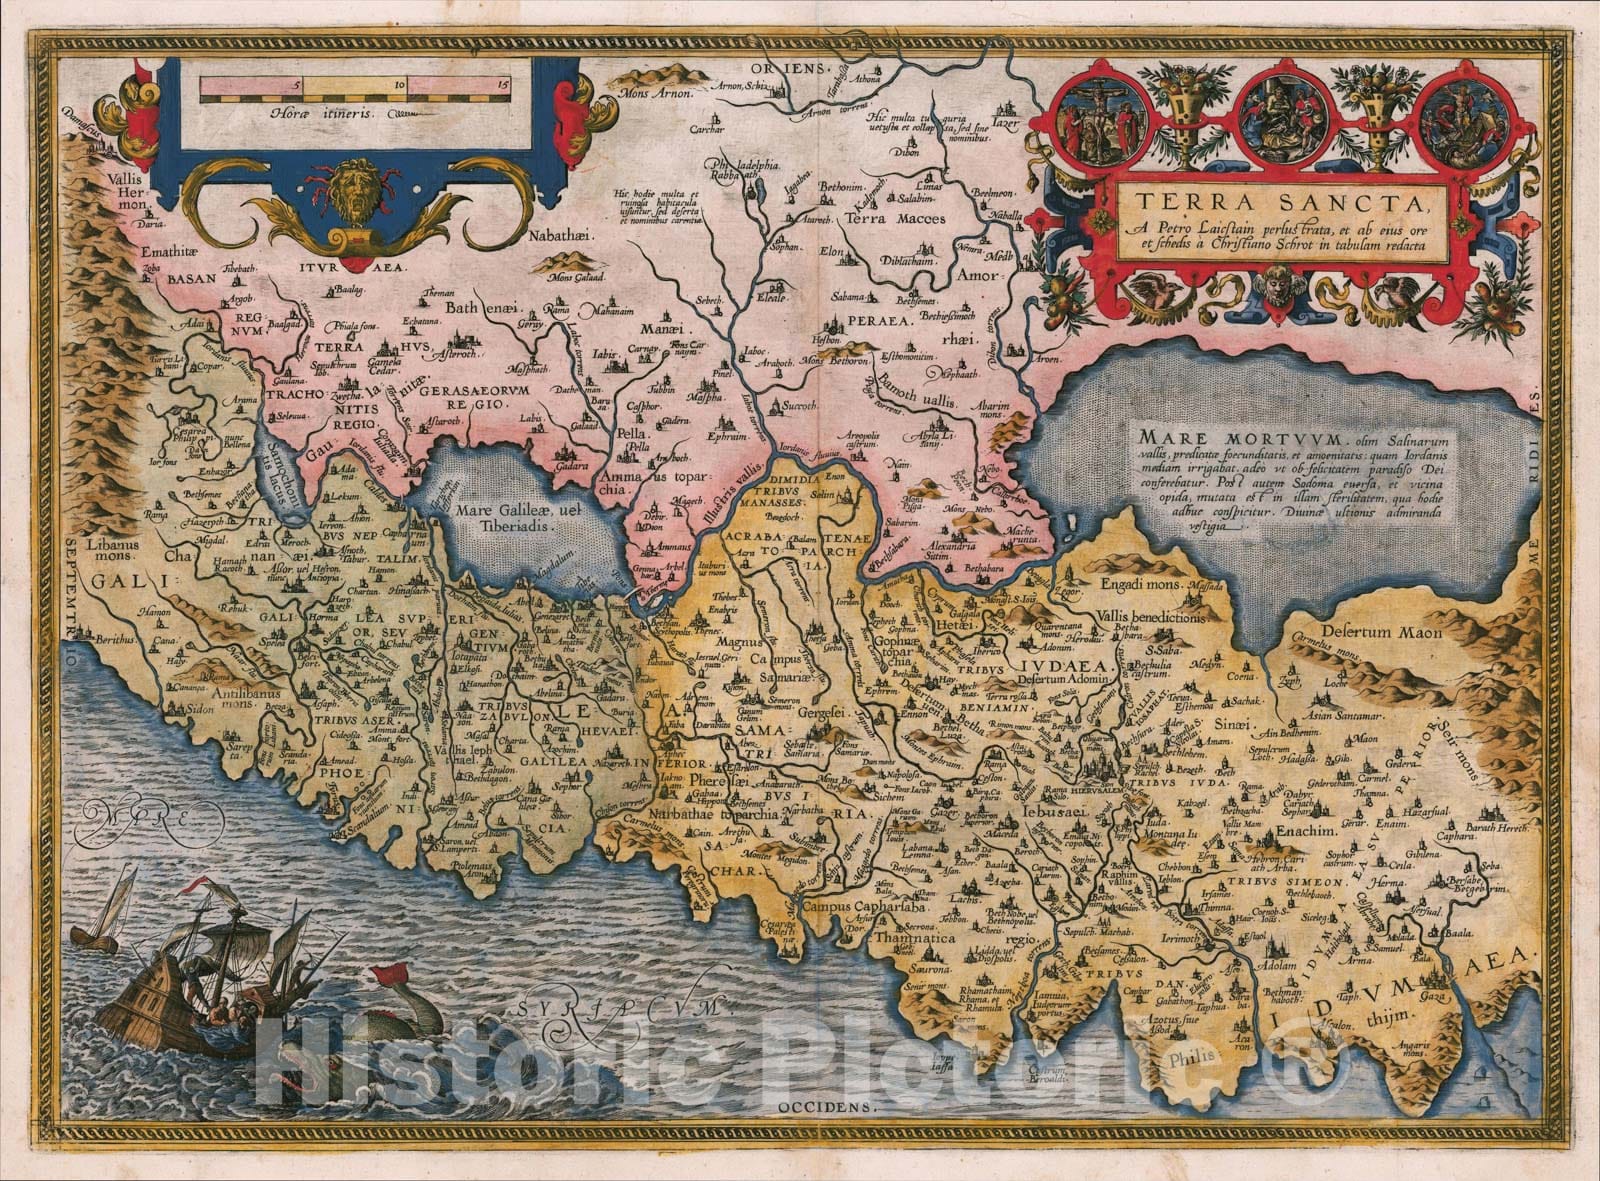 Historic Map : Terra Sancta, a Petro Laicstain perlustrata, et ab eius ore et schedis a Christiano Schrot in tabulam redacta, 1584, Abraham Ortelius, Vintage Wall Art